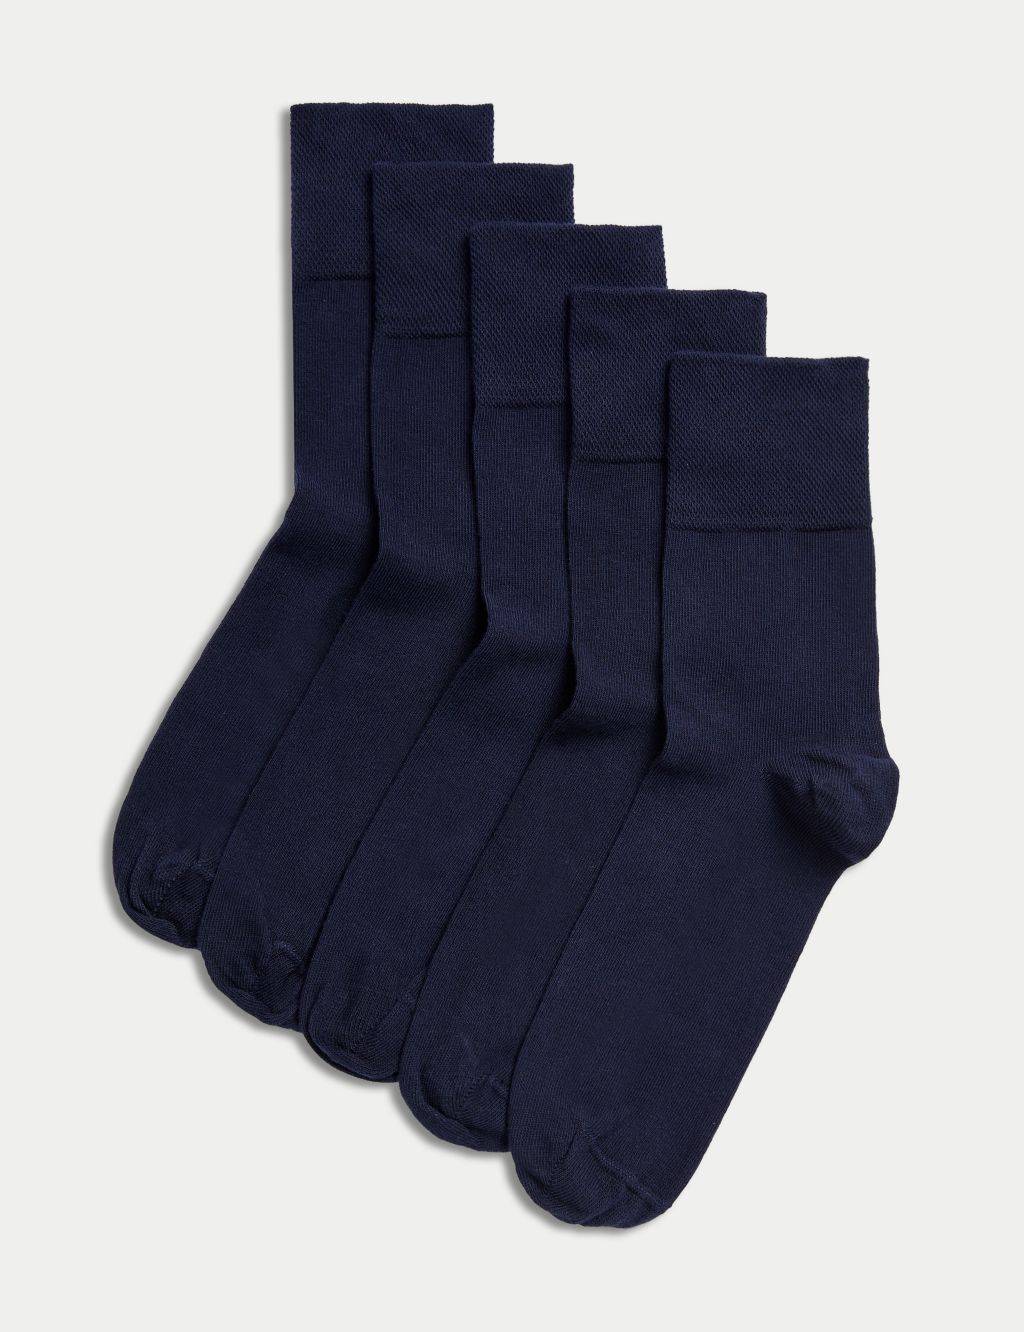 5pk Cotton Rich Soft Top Ankle High Socks image 1